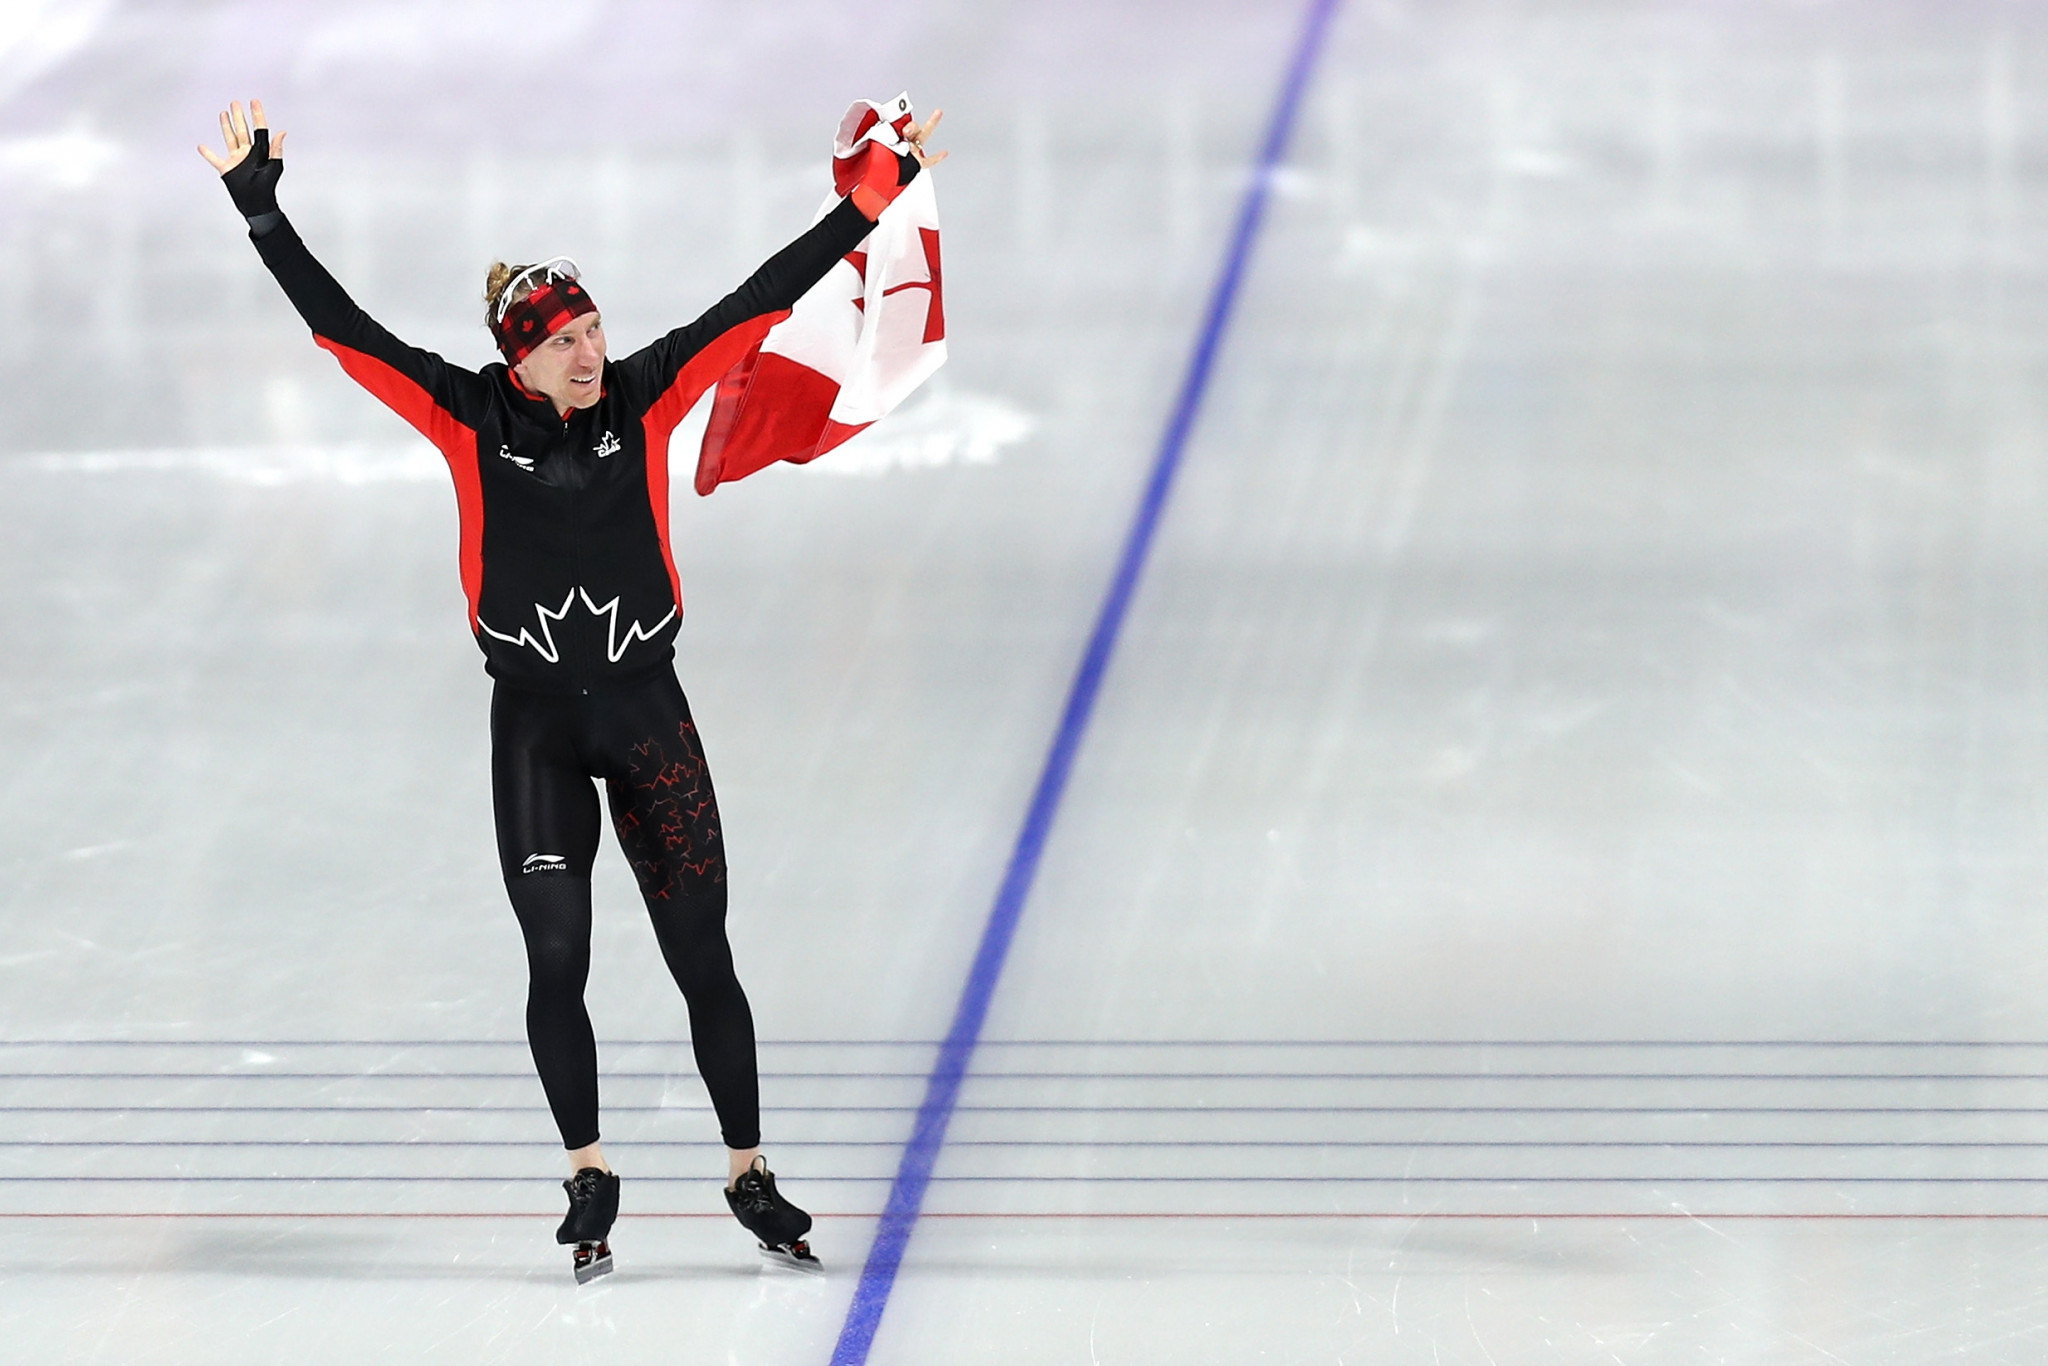 Dutch-born Canadian sets Olympic record to win men's 10,000m speed skating gold at Pyeongchang 2018